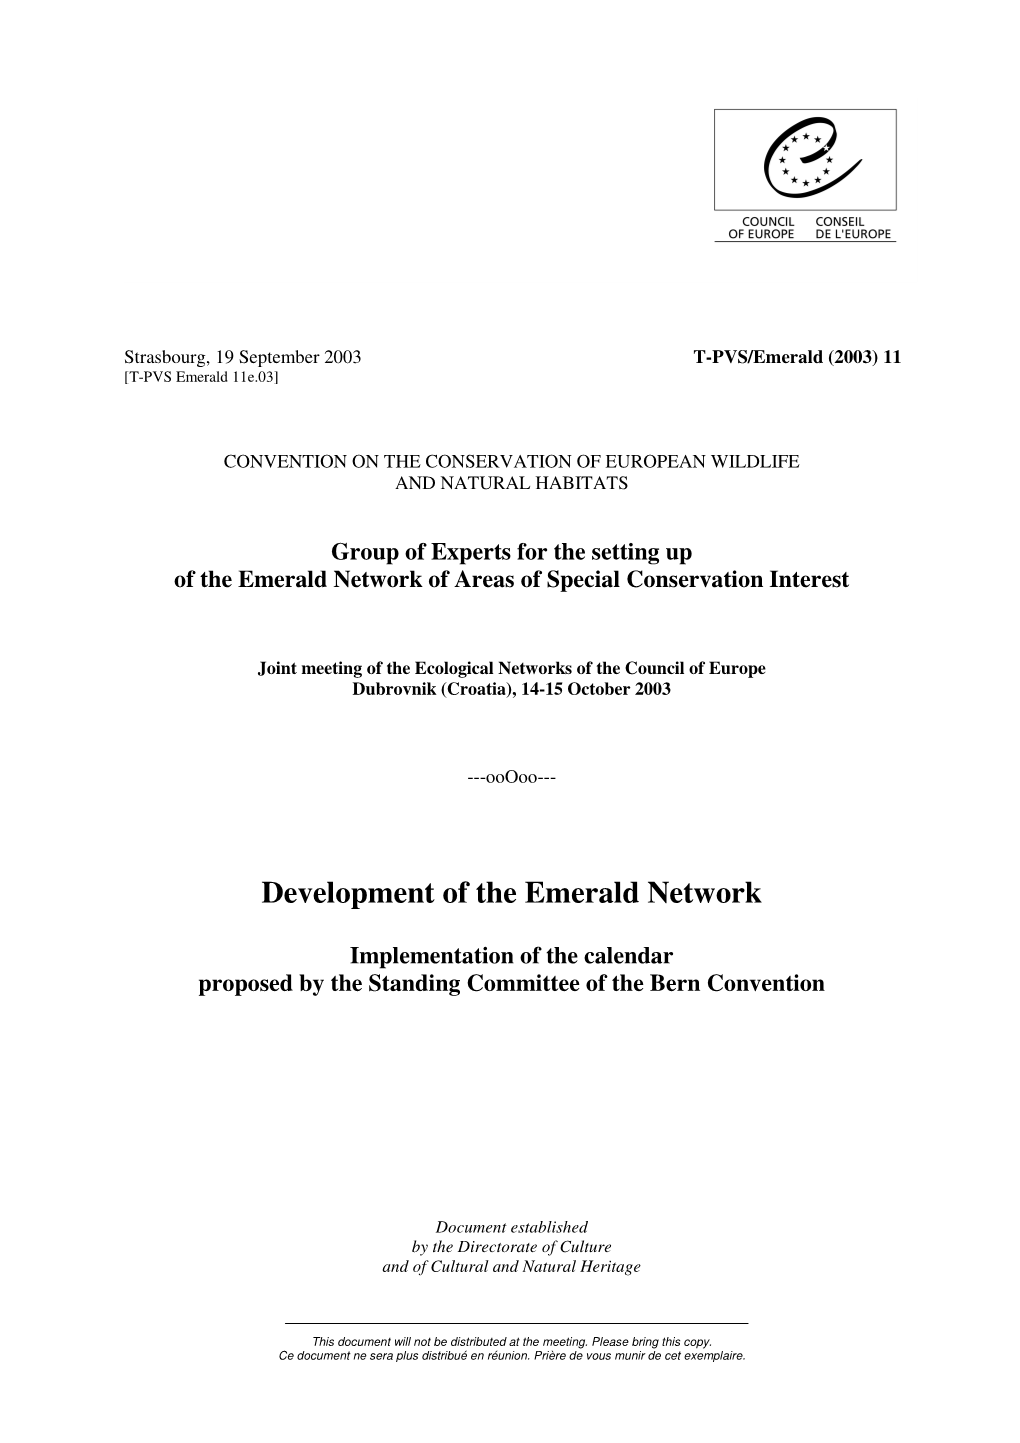 Development of the Emerald Network